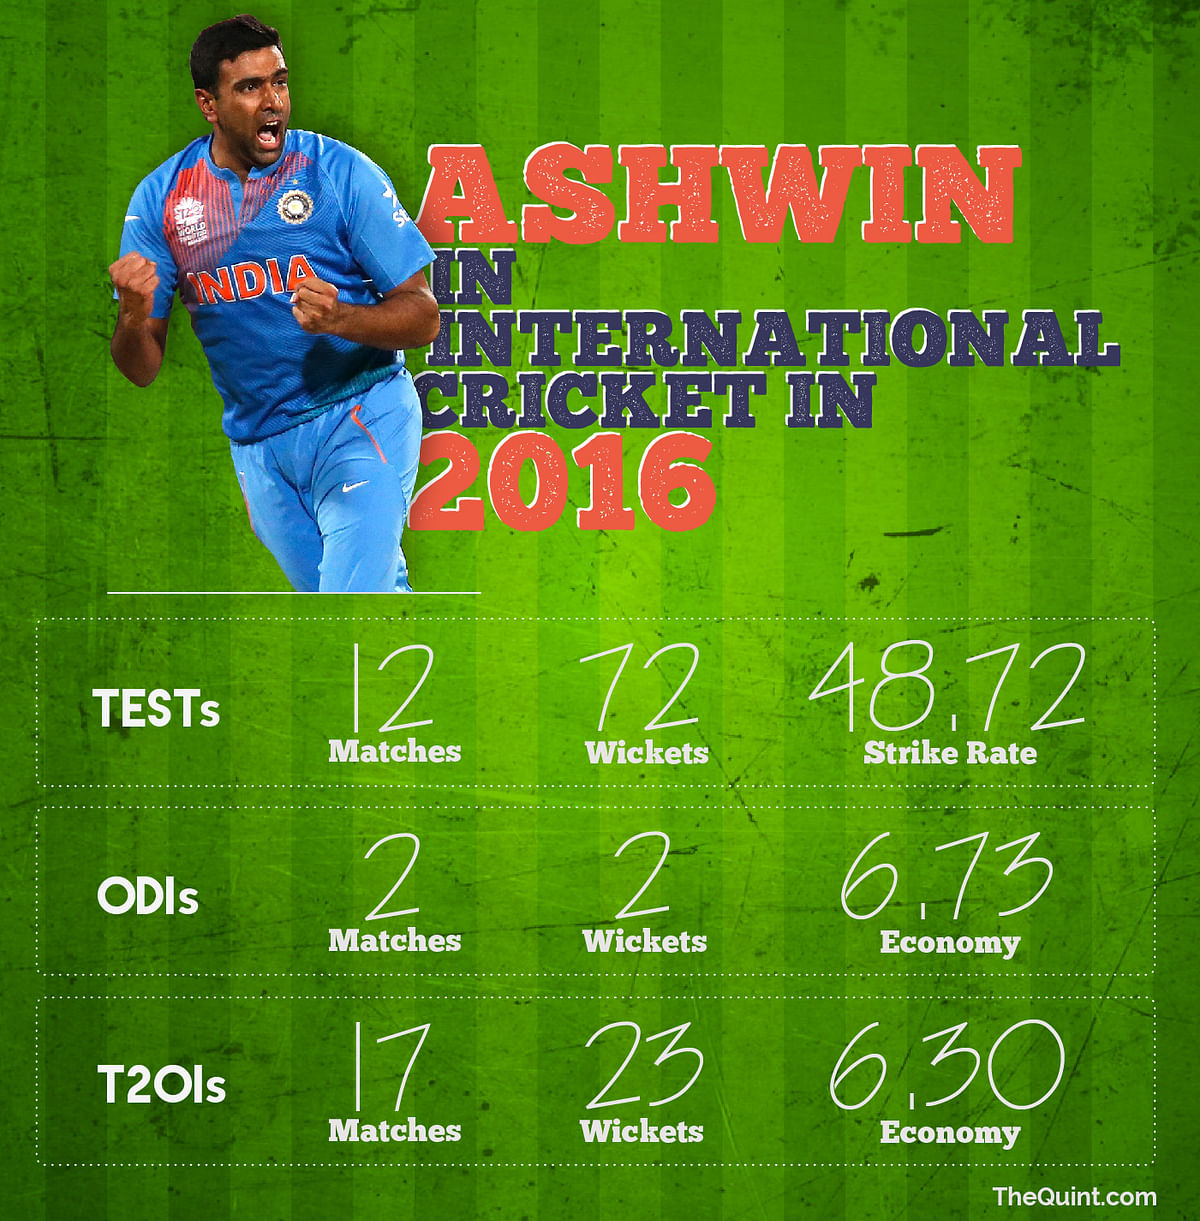 Statistician Arun Gopalakrishnan breaks down Ravichandran Ashwin’s 2016 in numbers.